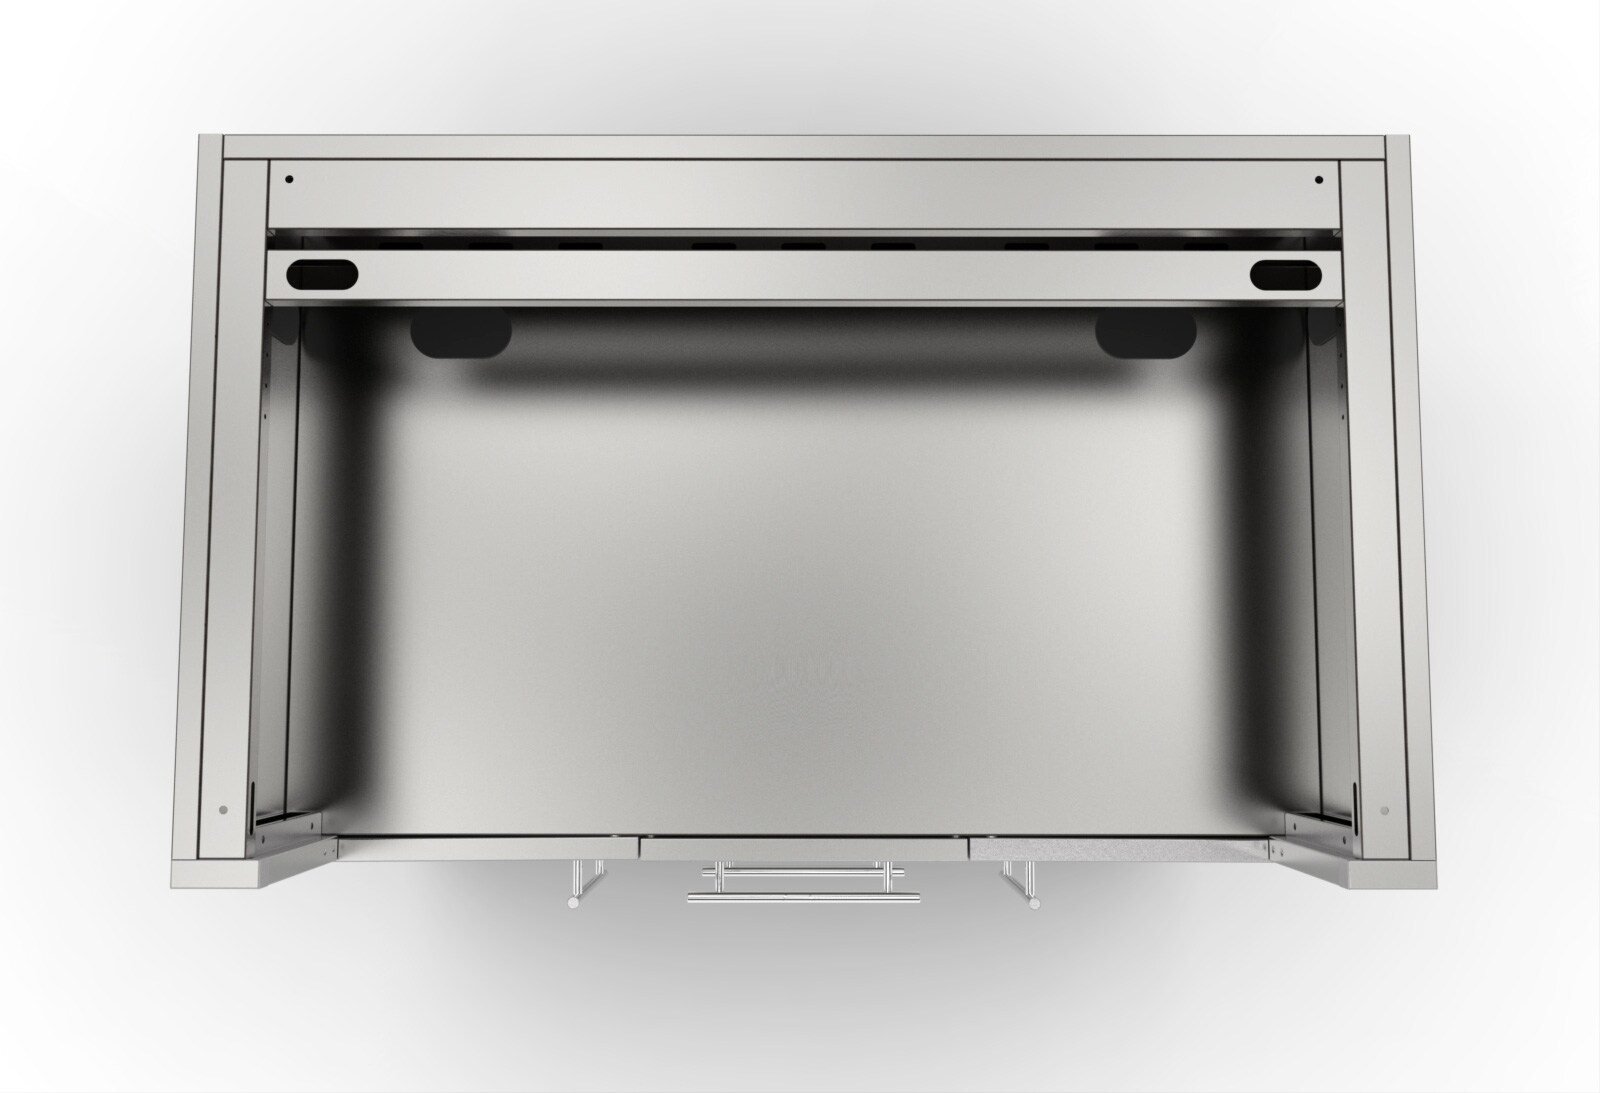 Stainless steel kitchen sink cabinet - SBC36FDD - SUNSTONE - for garden /  home